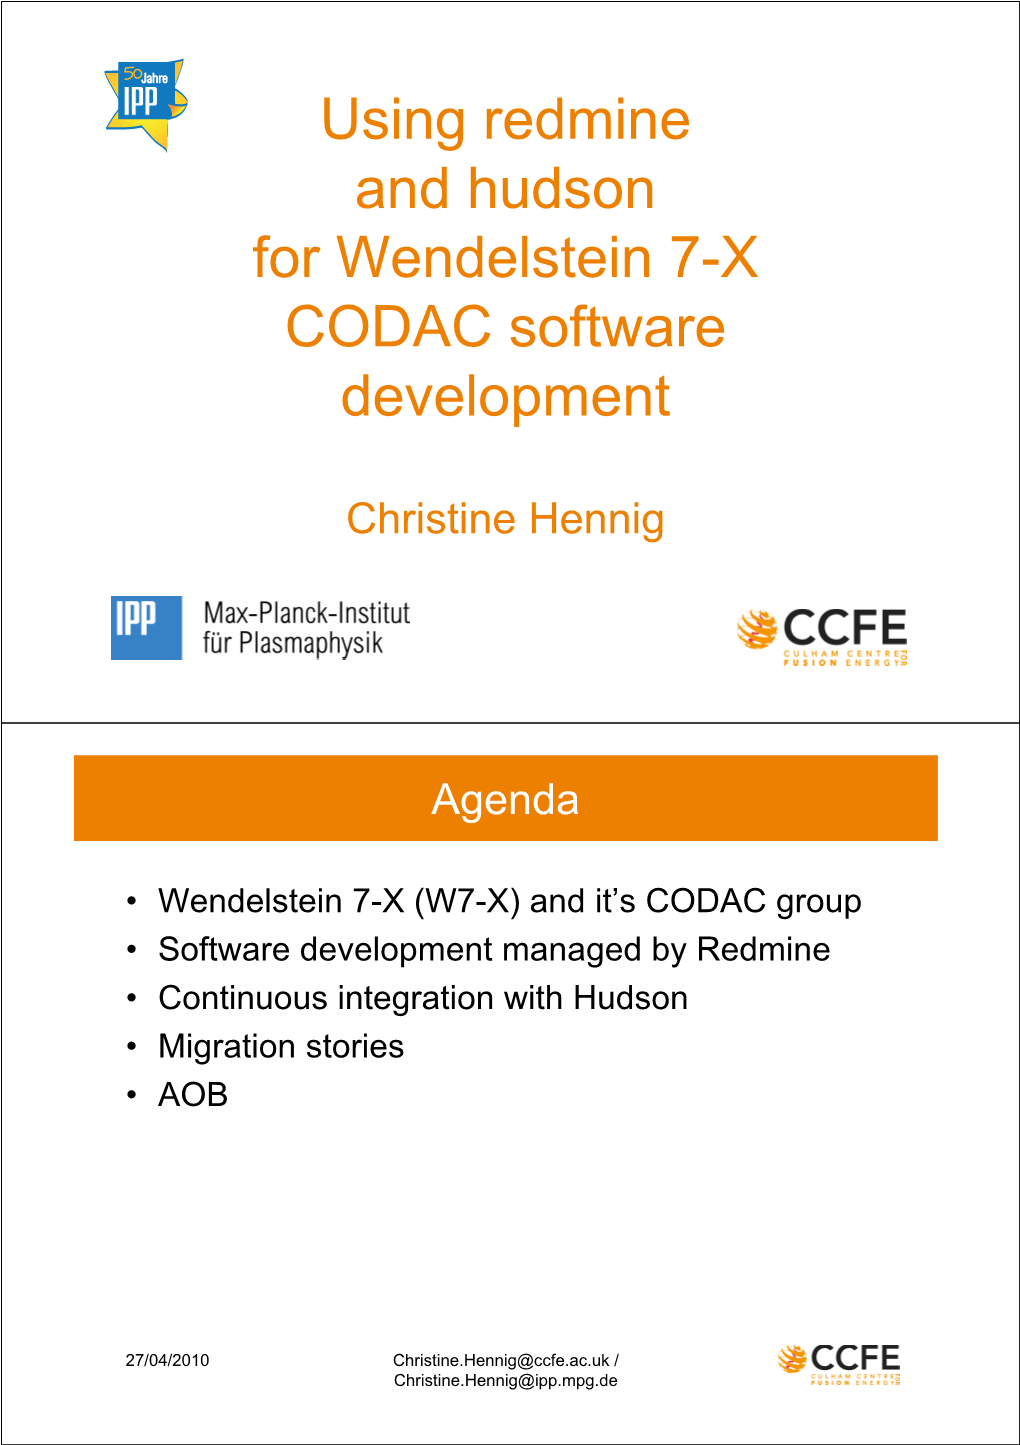 Using Redmine and Hudson for Wendelstein 7-X CODAC Software Development